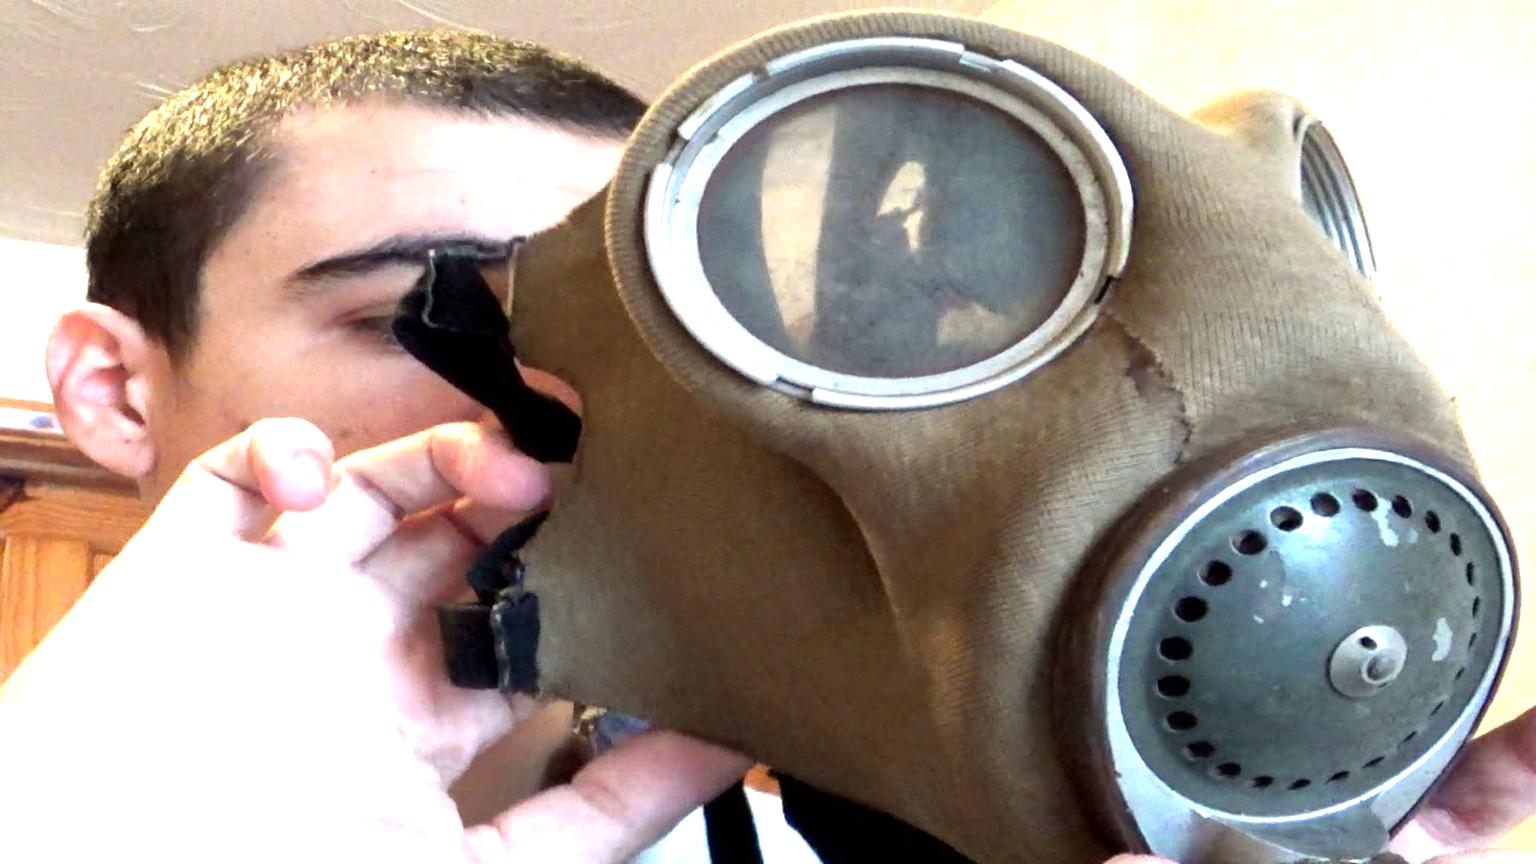 army gas mask